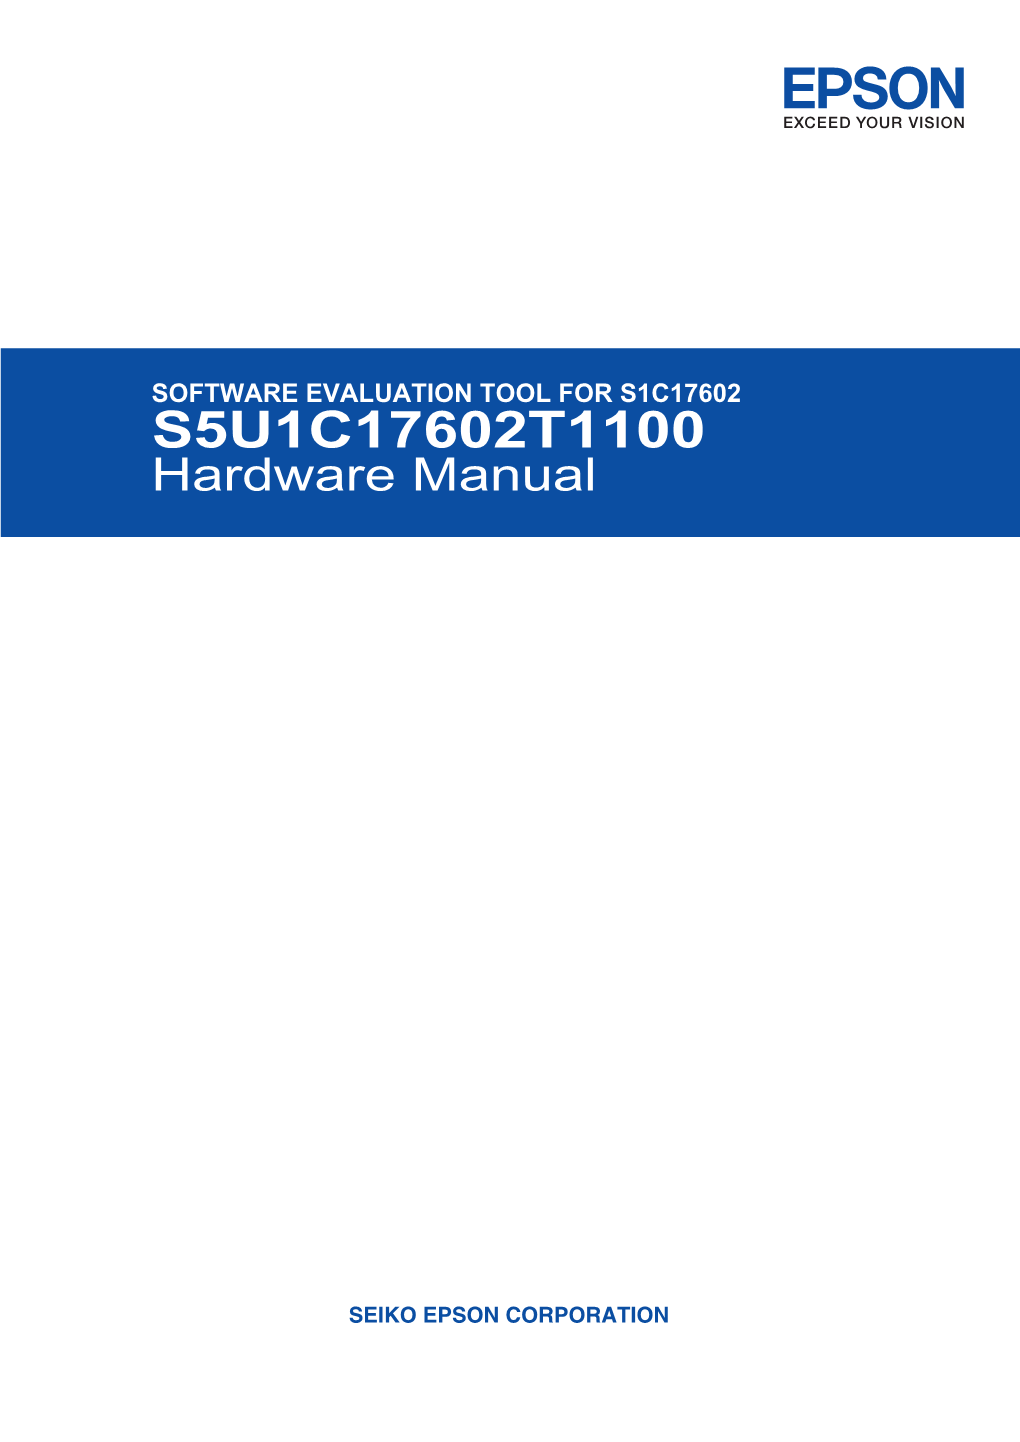 S5U1C17602T1100 Hardware Manual